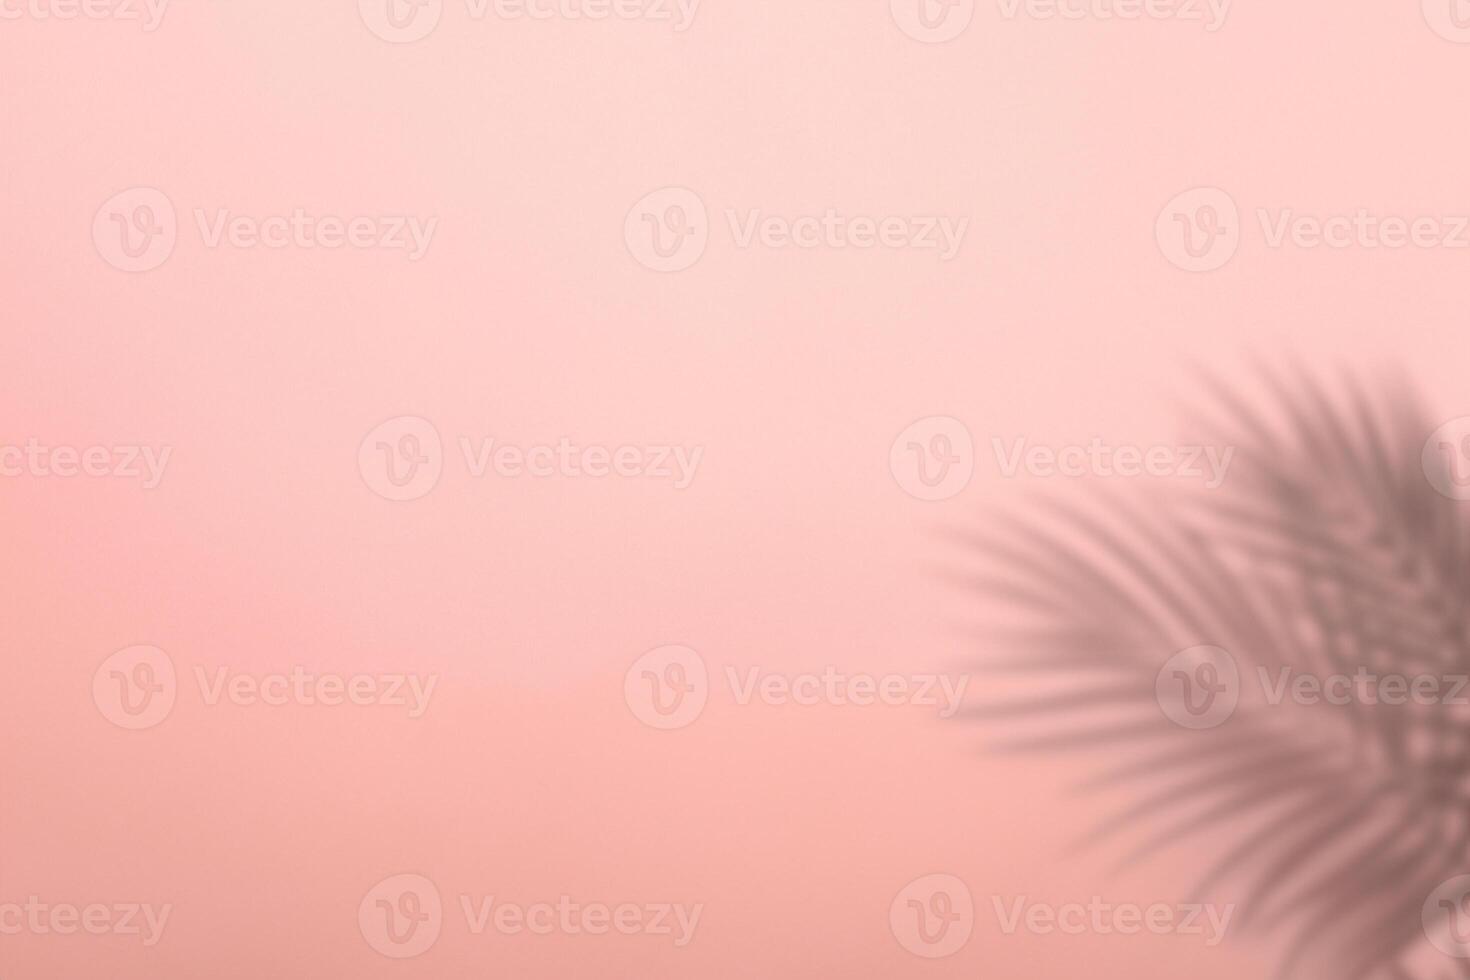 tropical oscuridad, palma hojas silueta en contra rosado pared antecedentes. foto